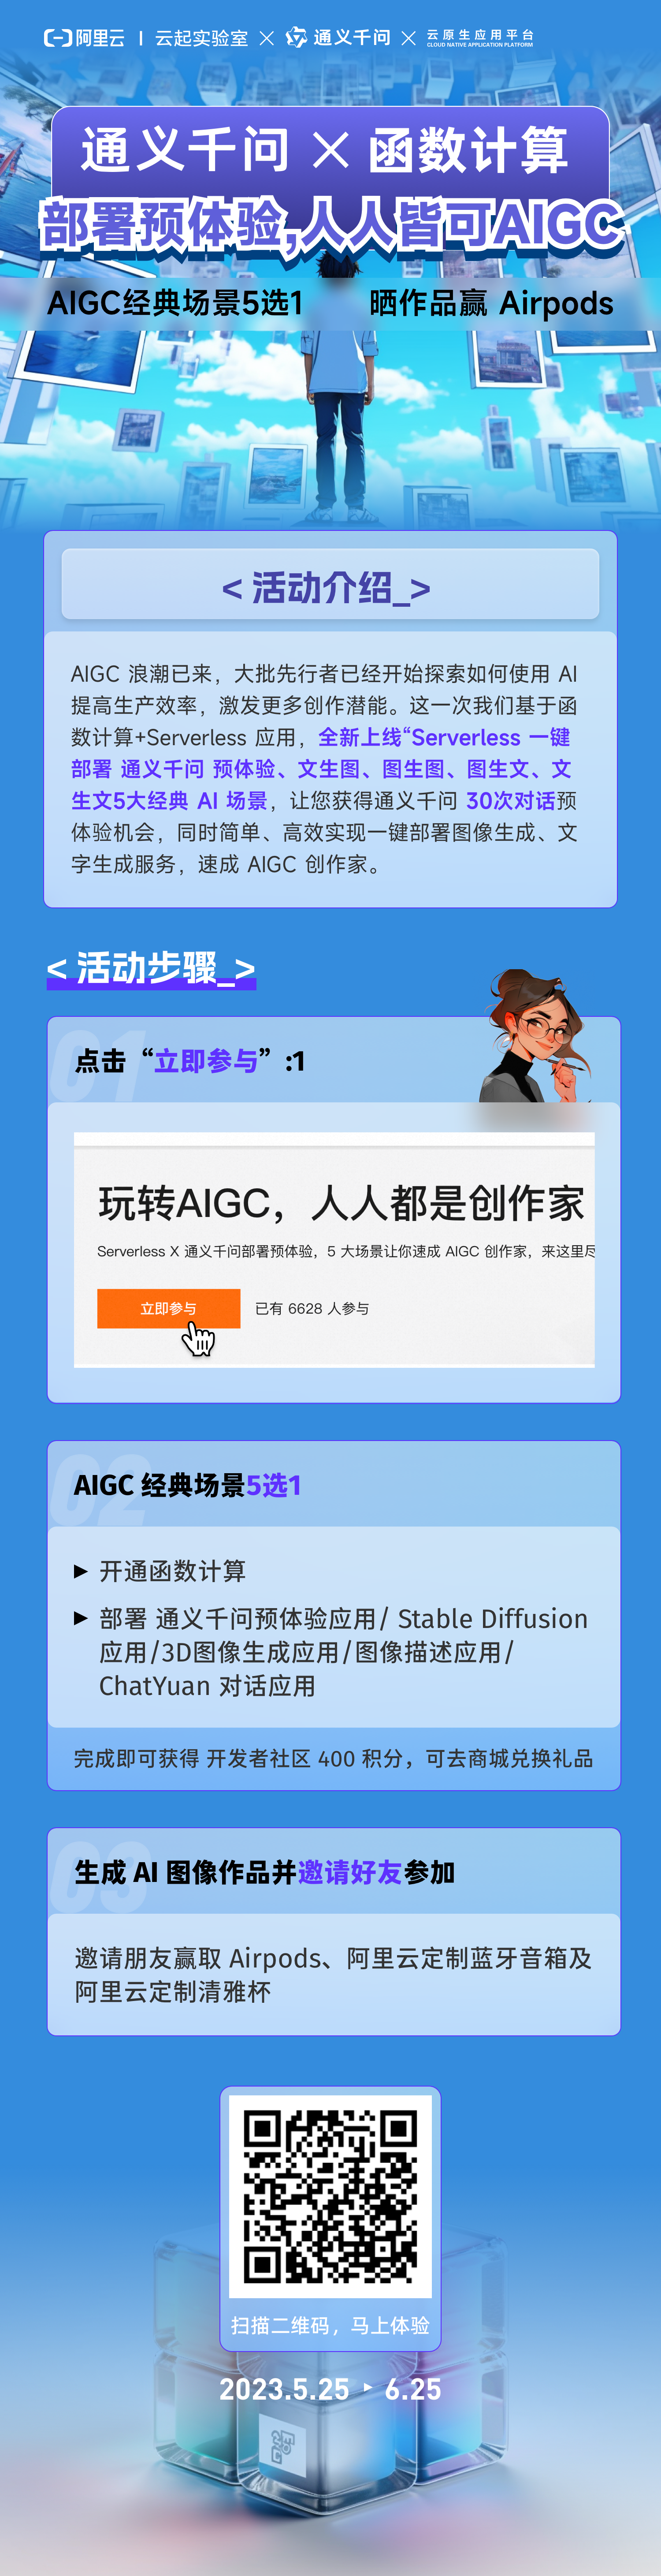 AIGC 通义千问 活动二期.png